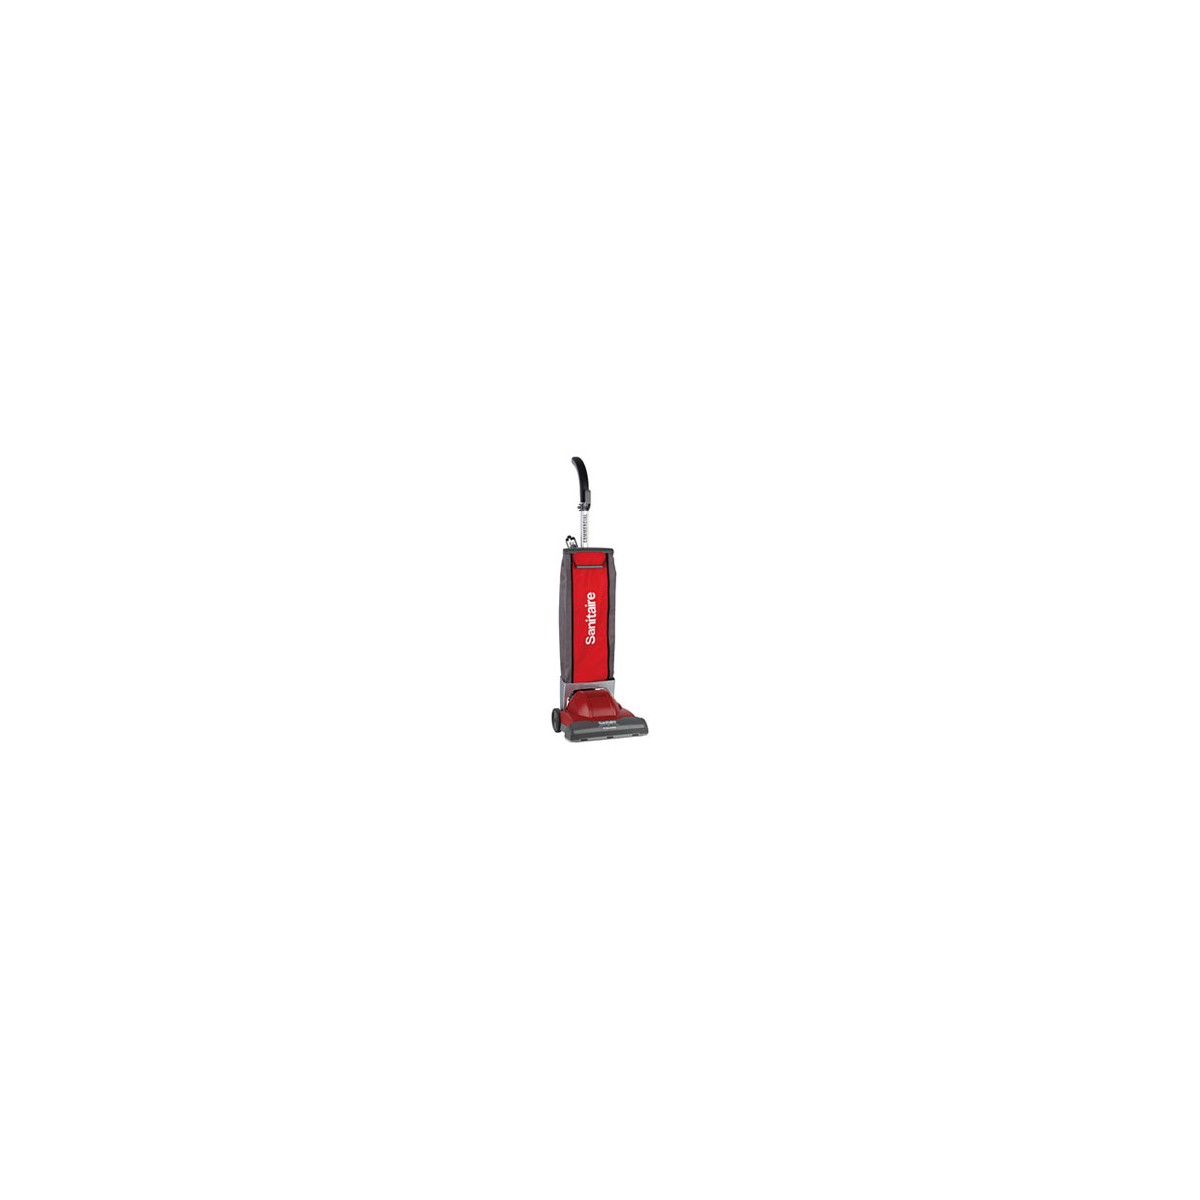 Eureka Sanitaire SC9050 Commercial Upright Vacuum Carry Handle # 79034355N 